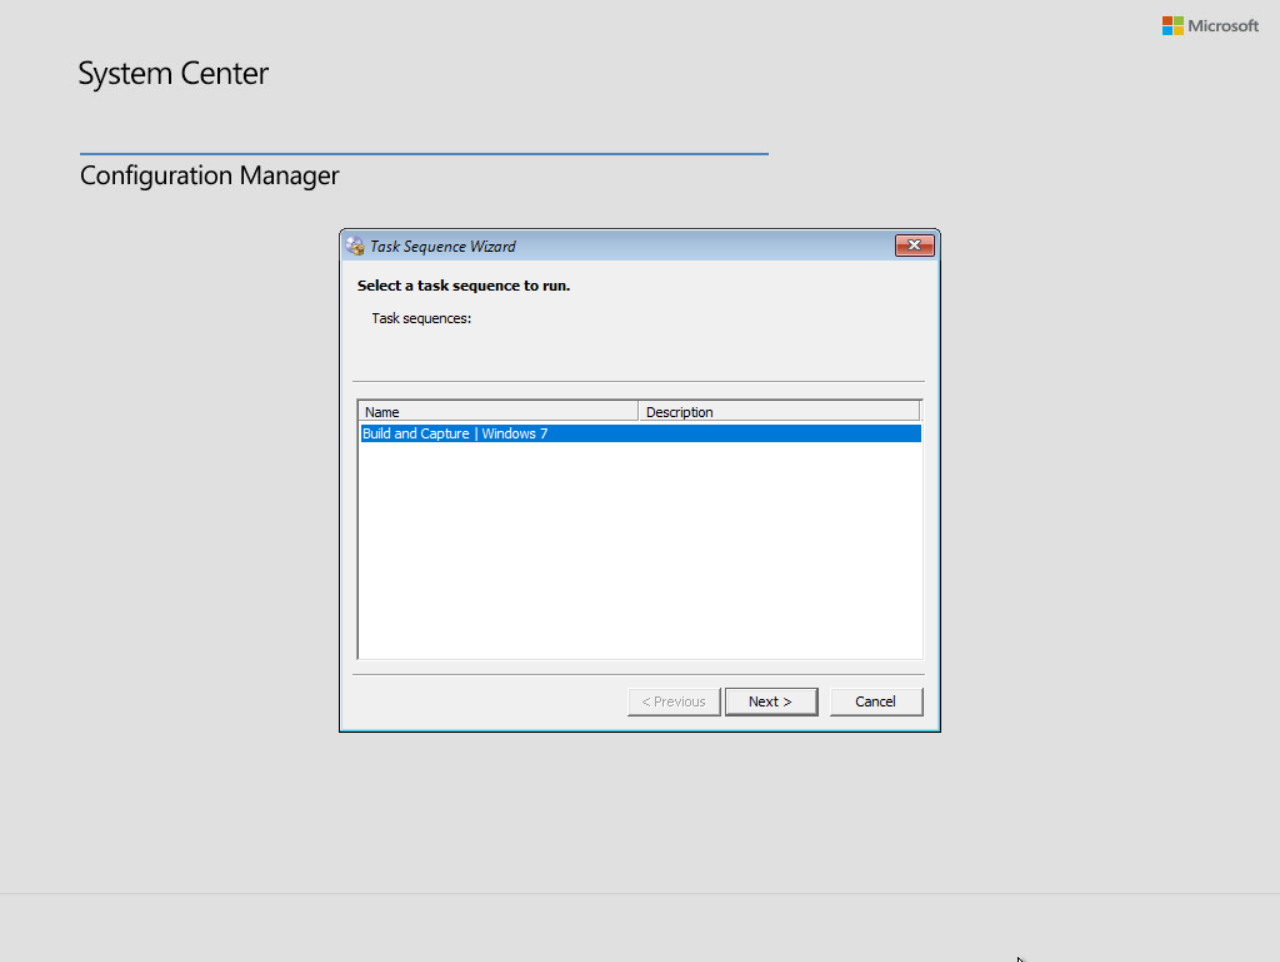 SCCM Windows 7 Convenience Rollup Image Creation